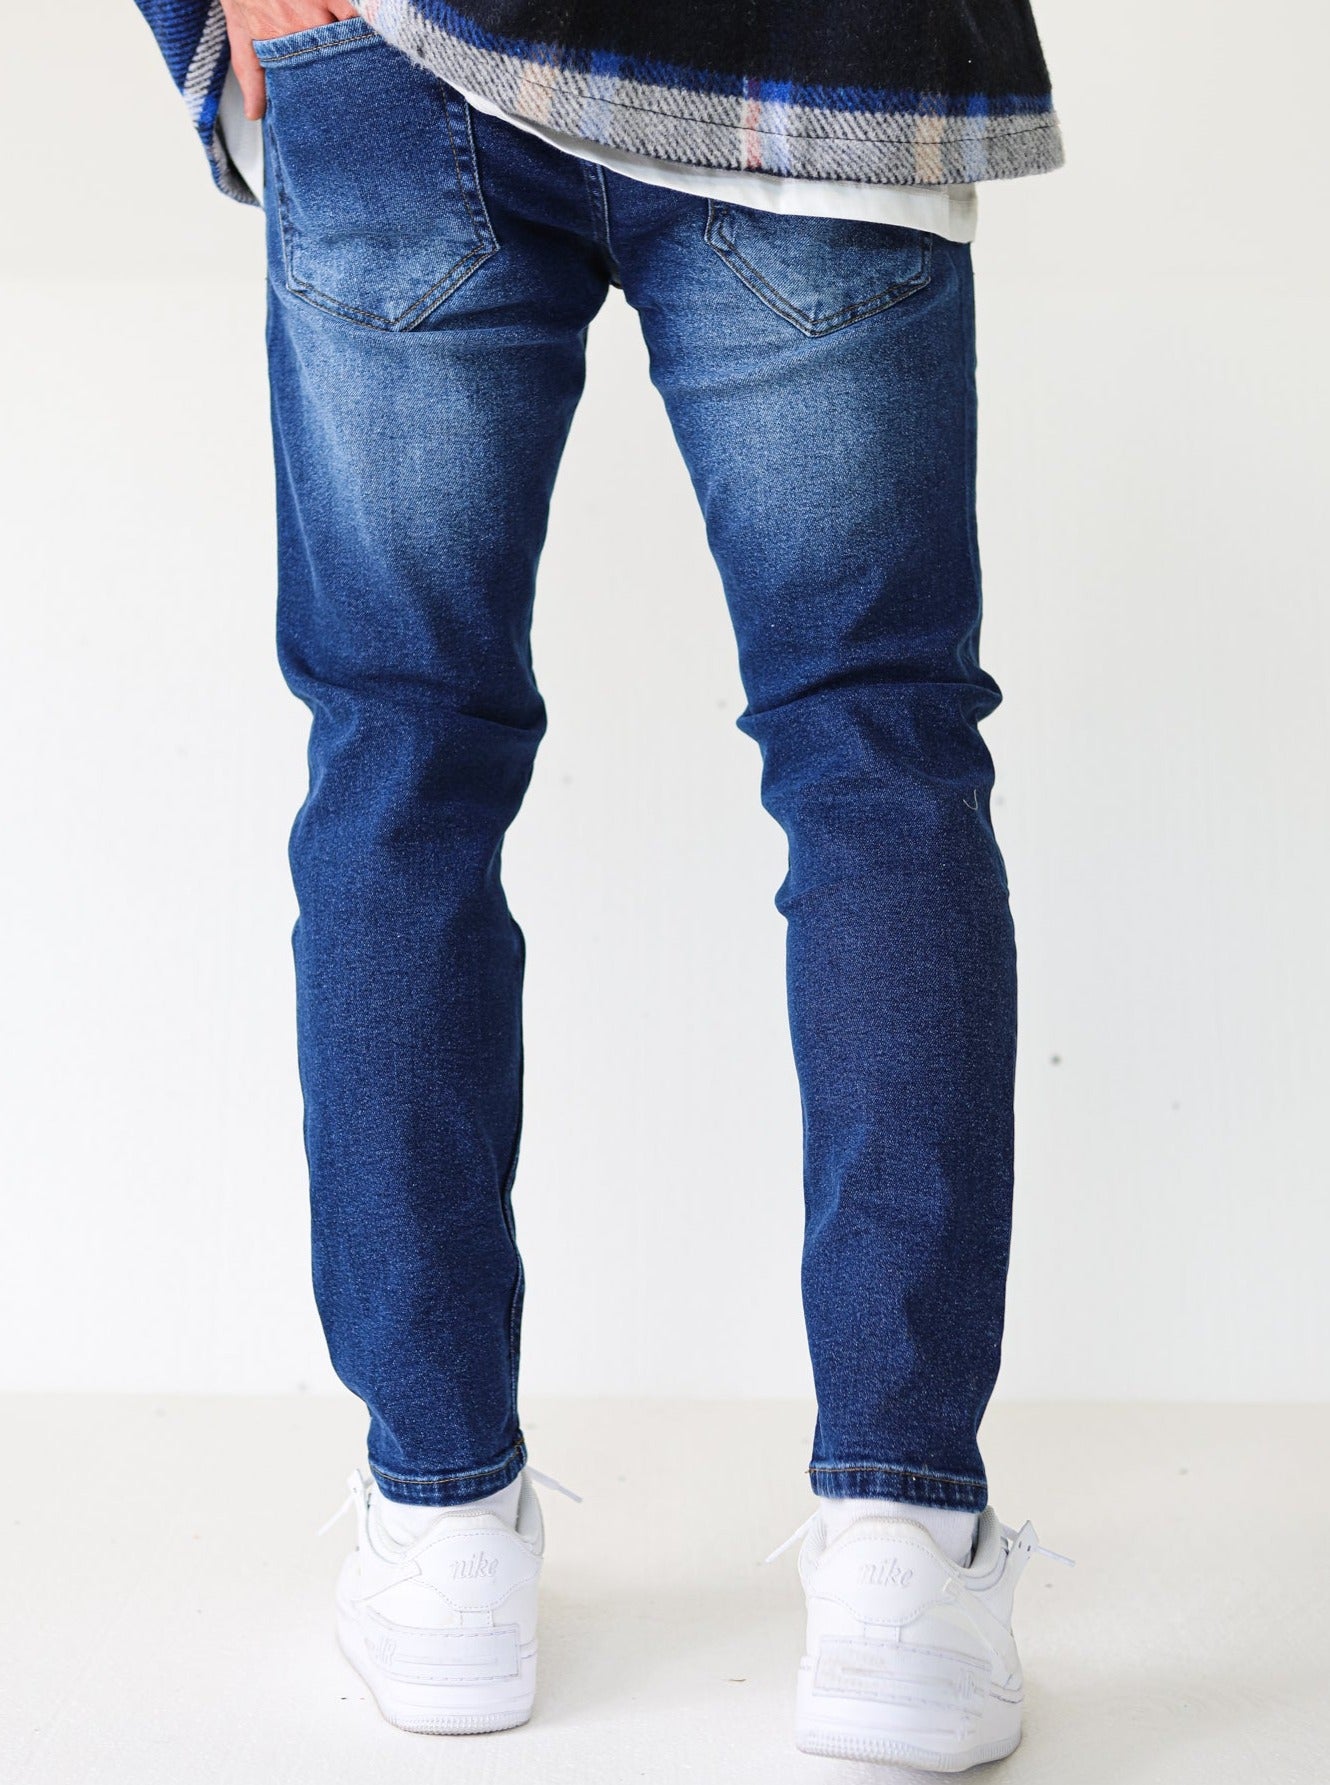 Premium Slightly Ripped Blue Jeans - UNEFFECTED STUDIOS® - Pants - 2Y PREMIUM